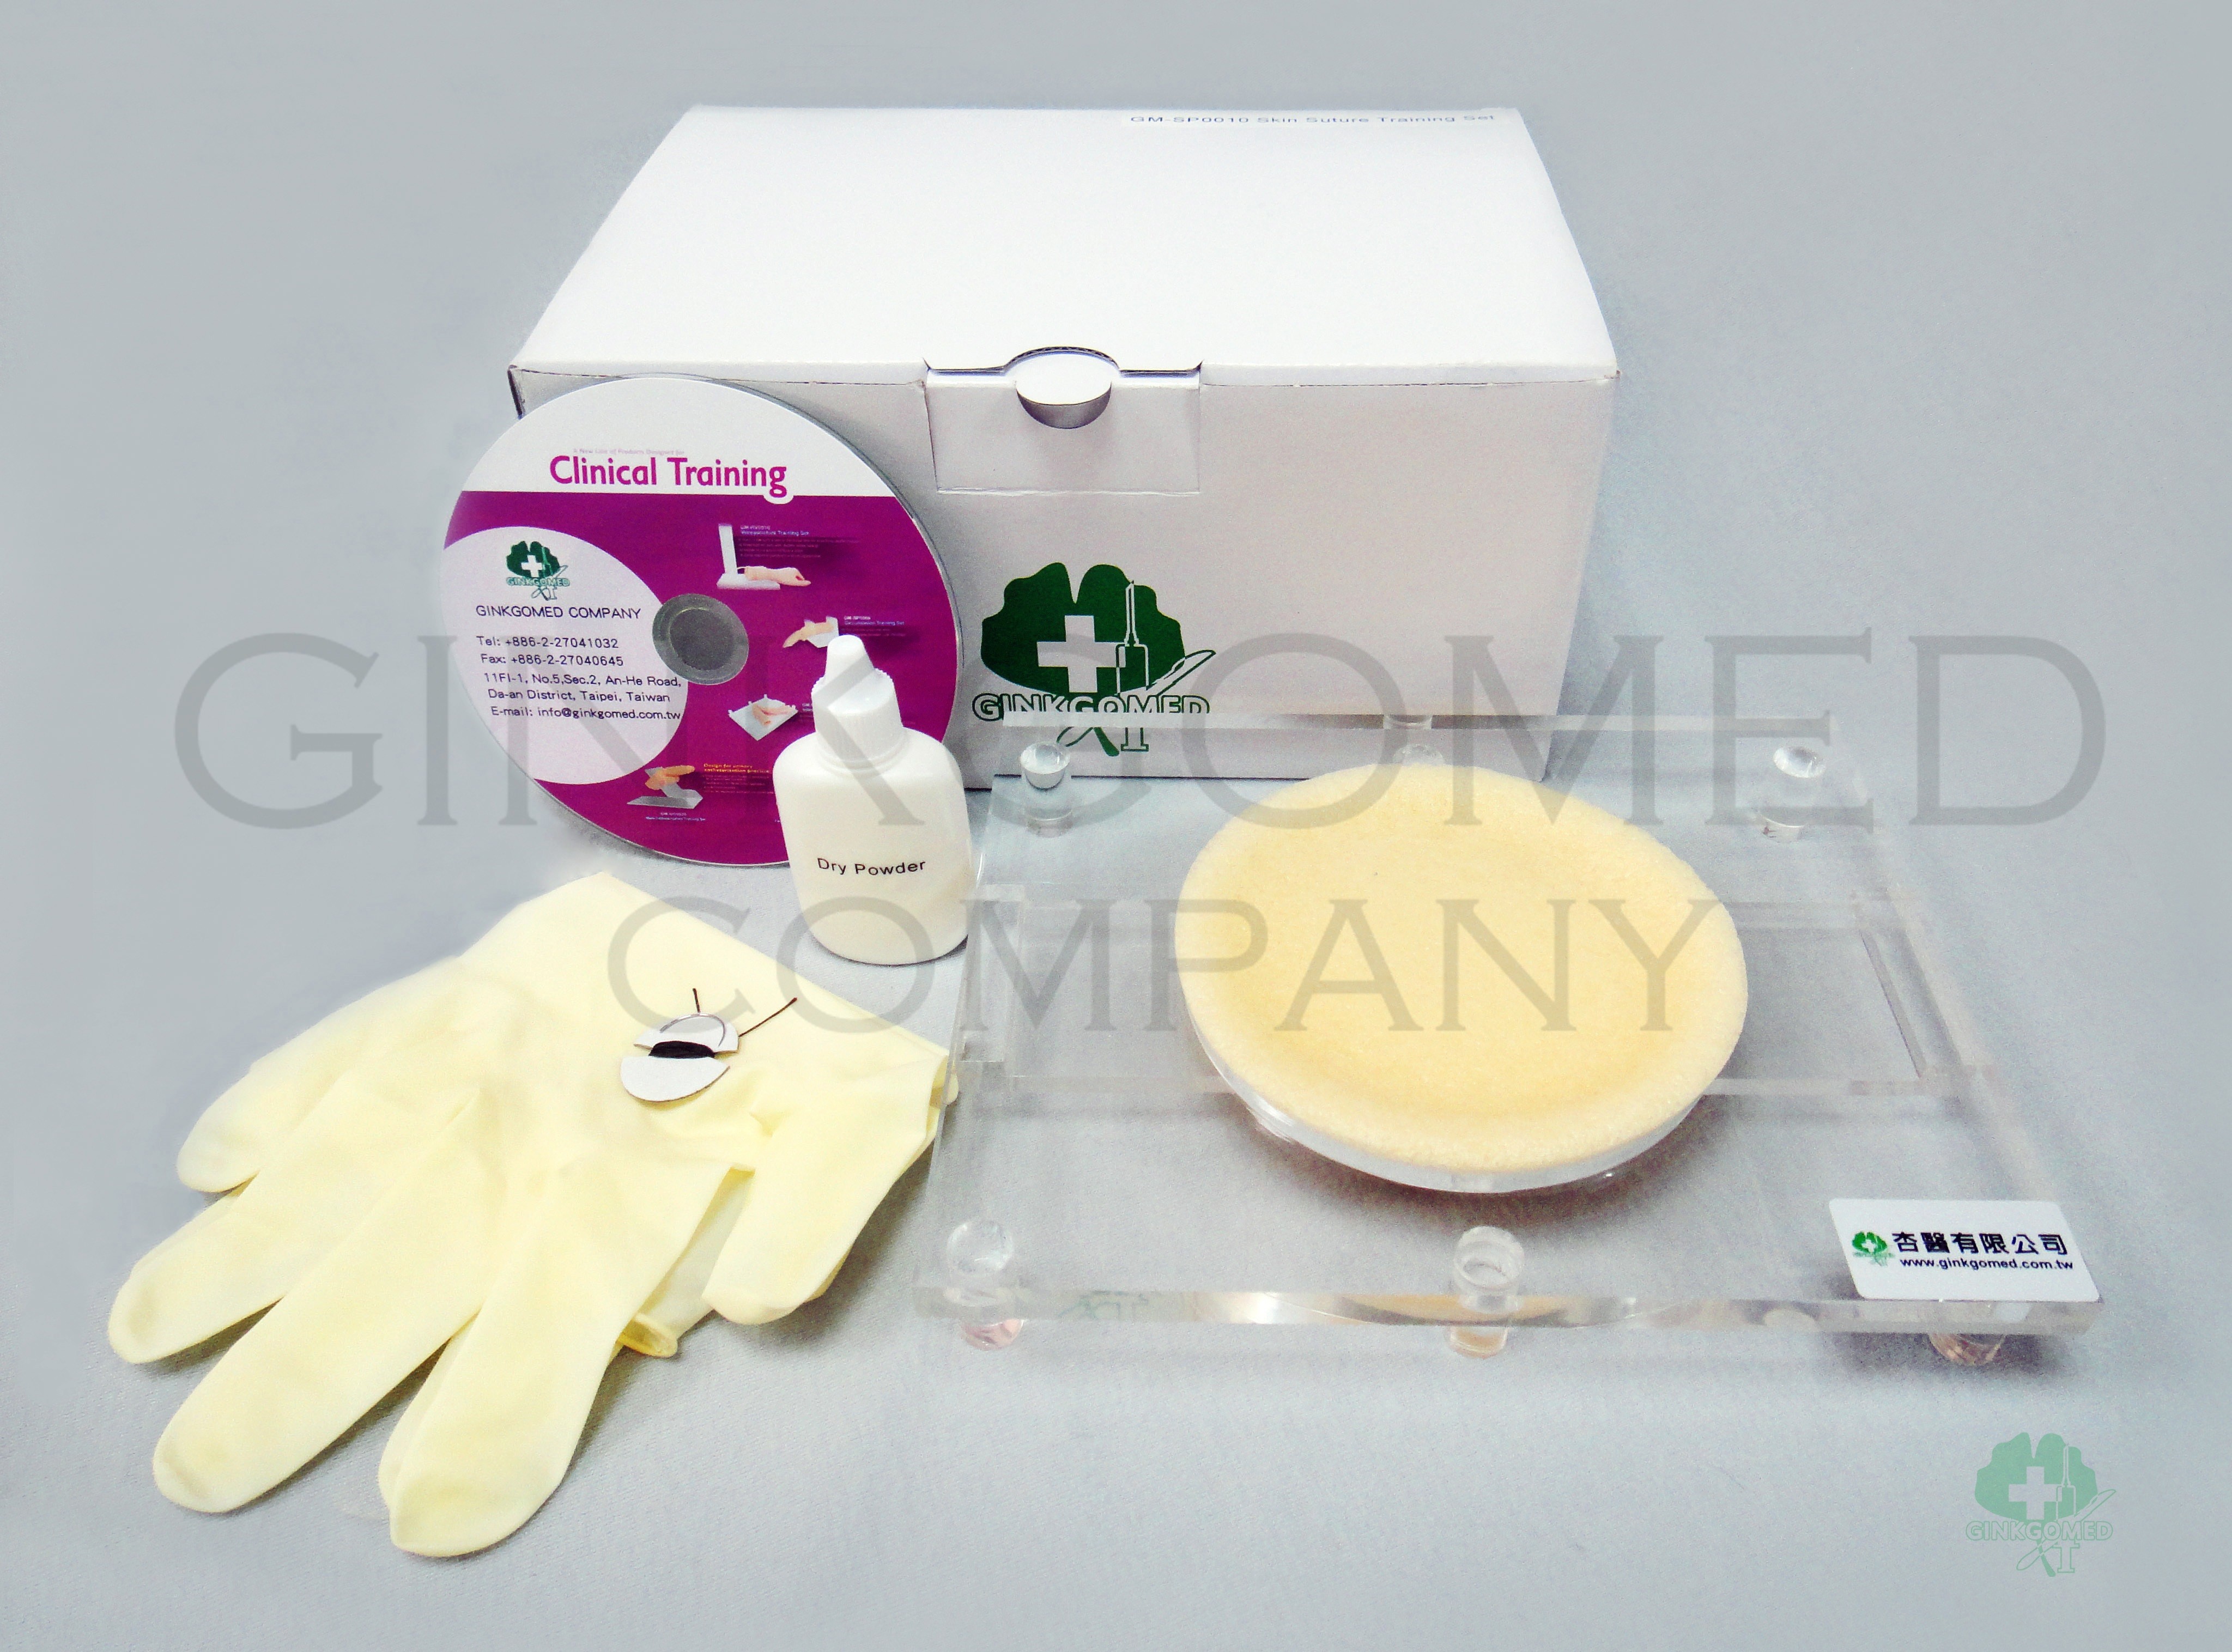 GM-SP0010  Skin Suture Training Set